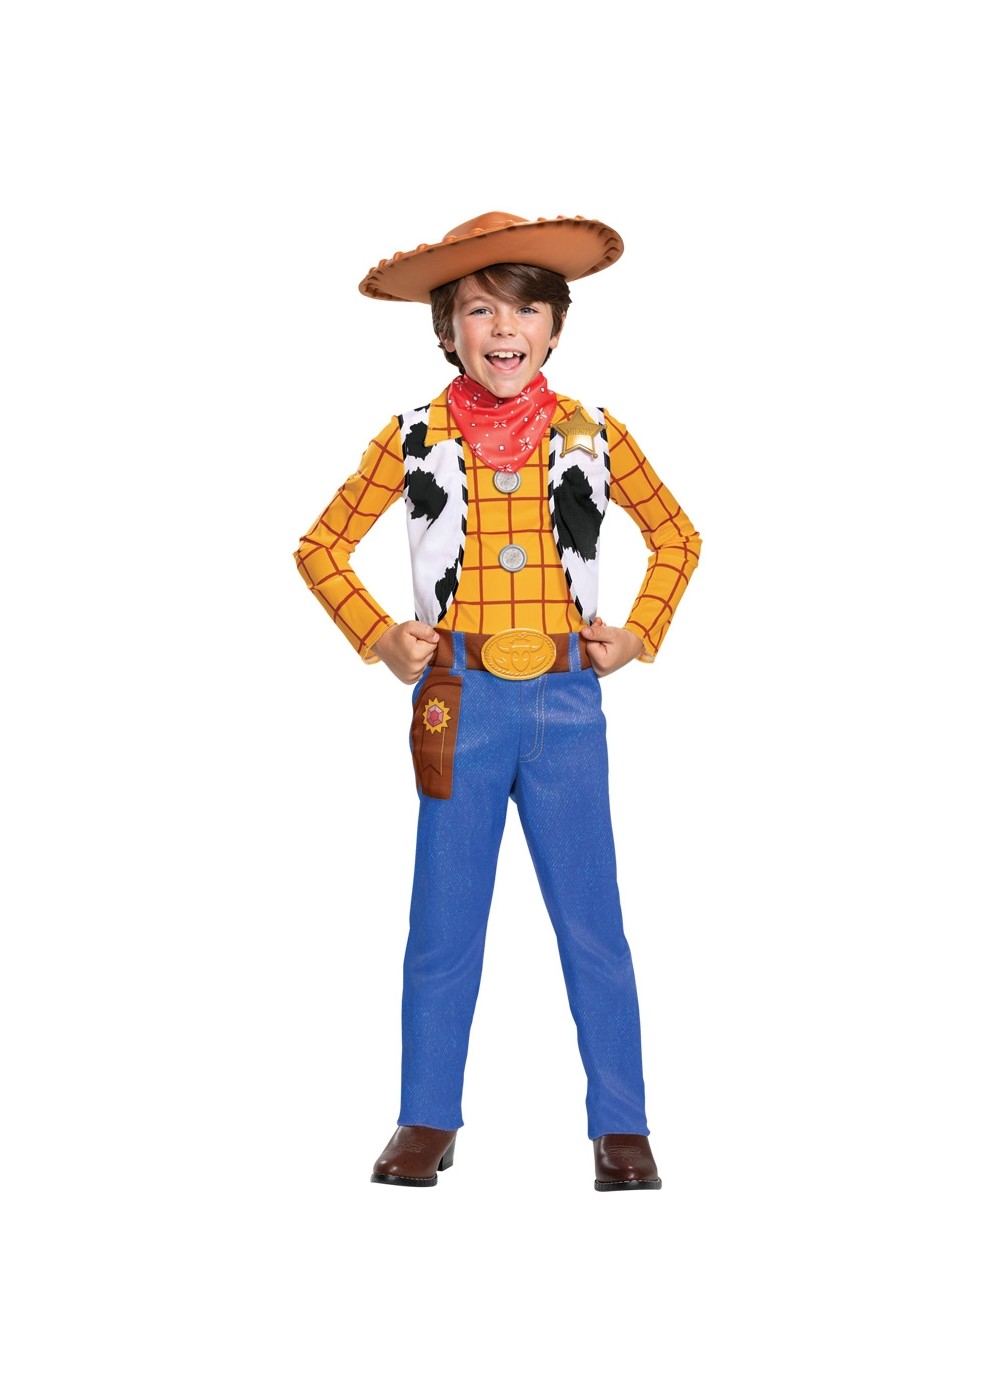 Disney Toy Storys Woody Boys Costume